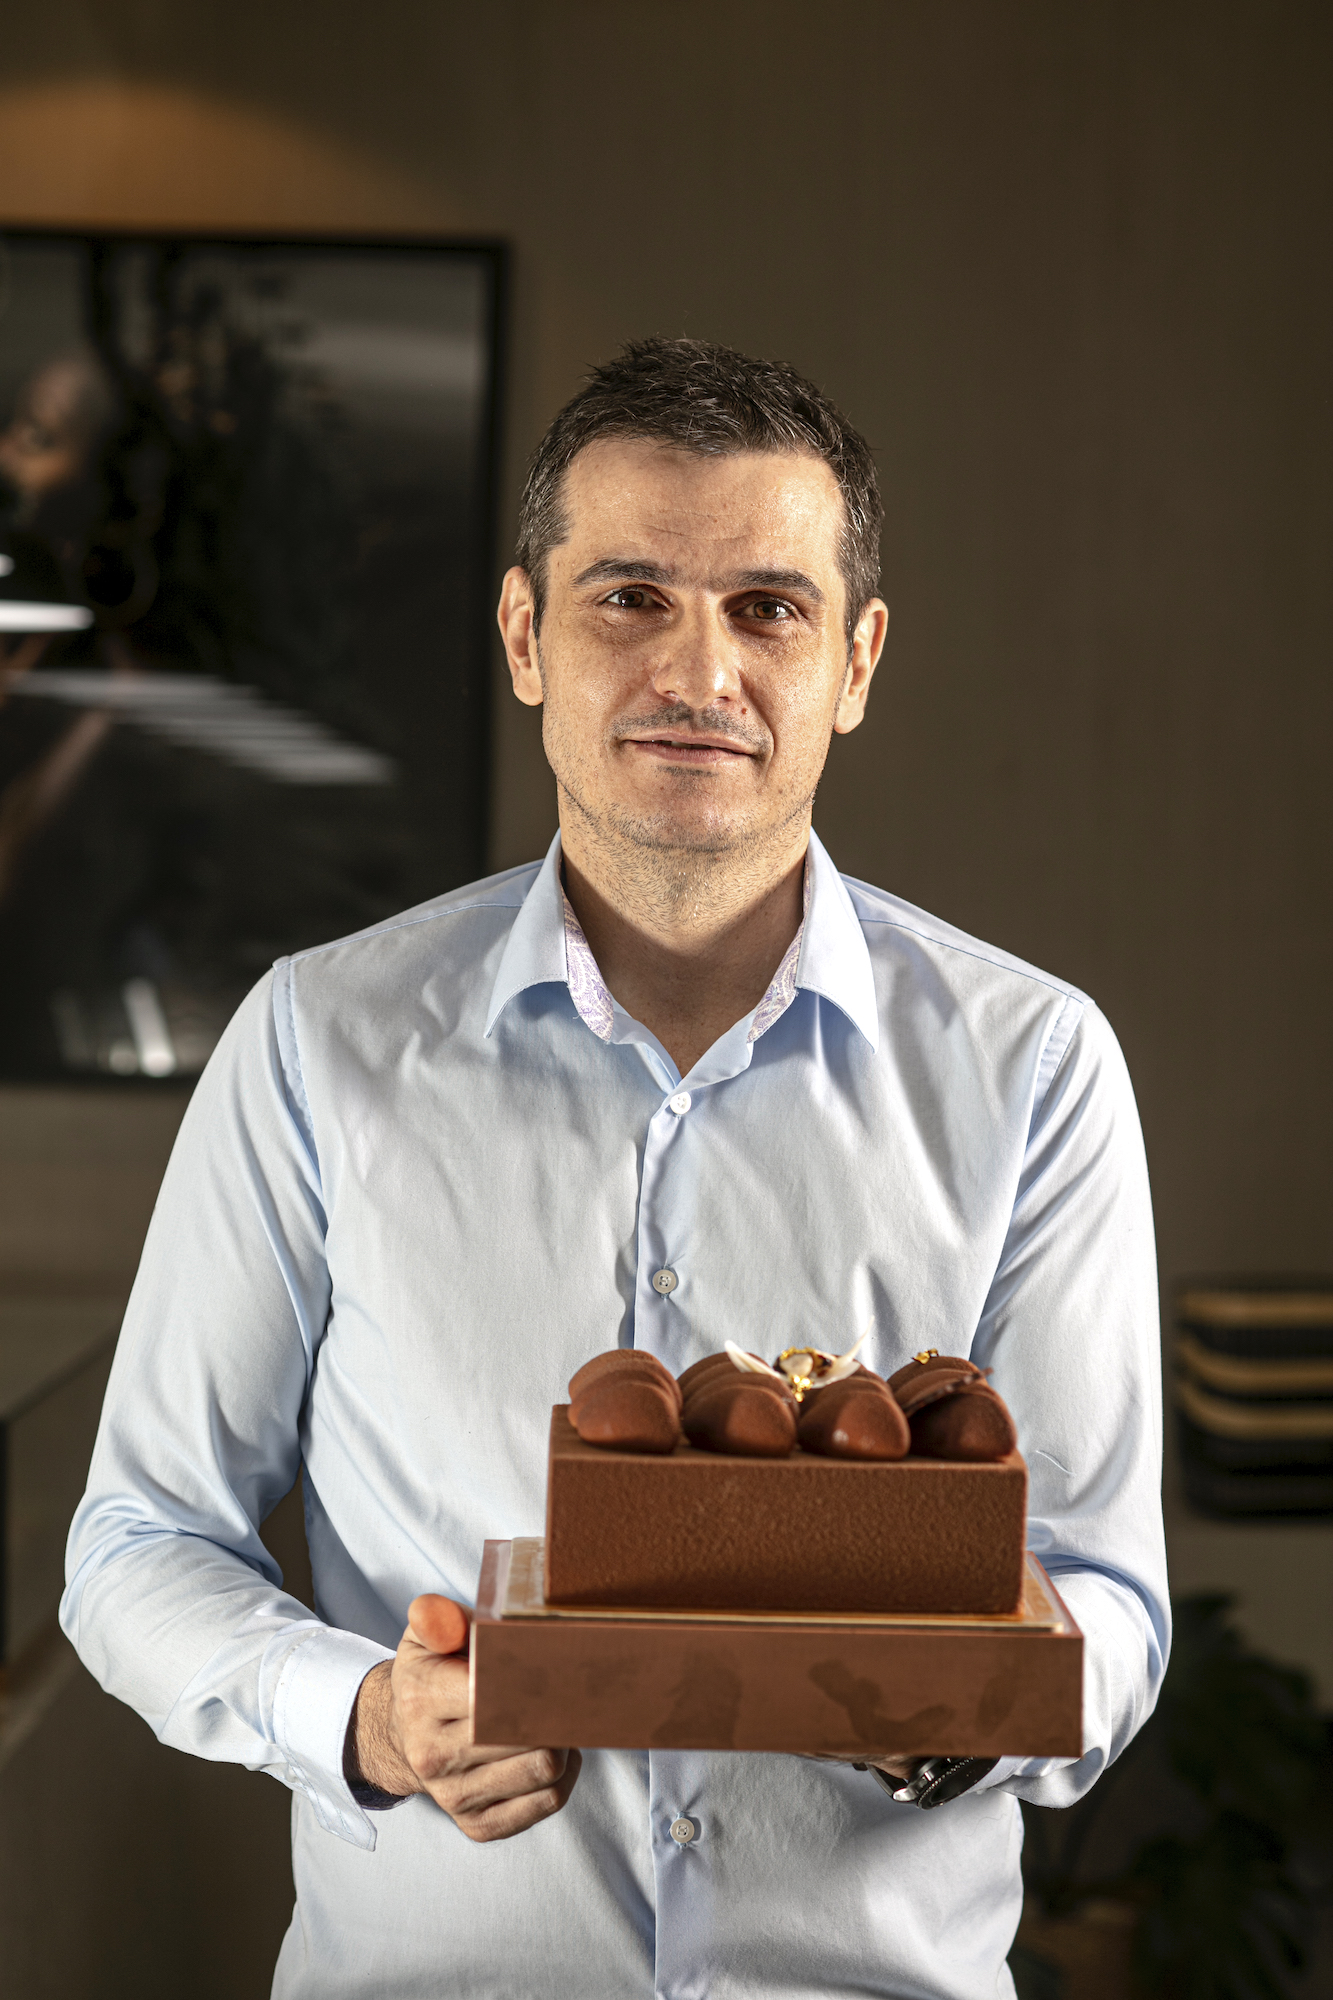 Dylan Patisserie general manager Nikola Ivanov holding one of their signature cakes: De Hazelnut Praline